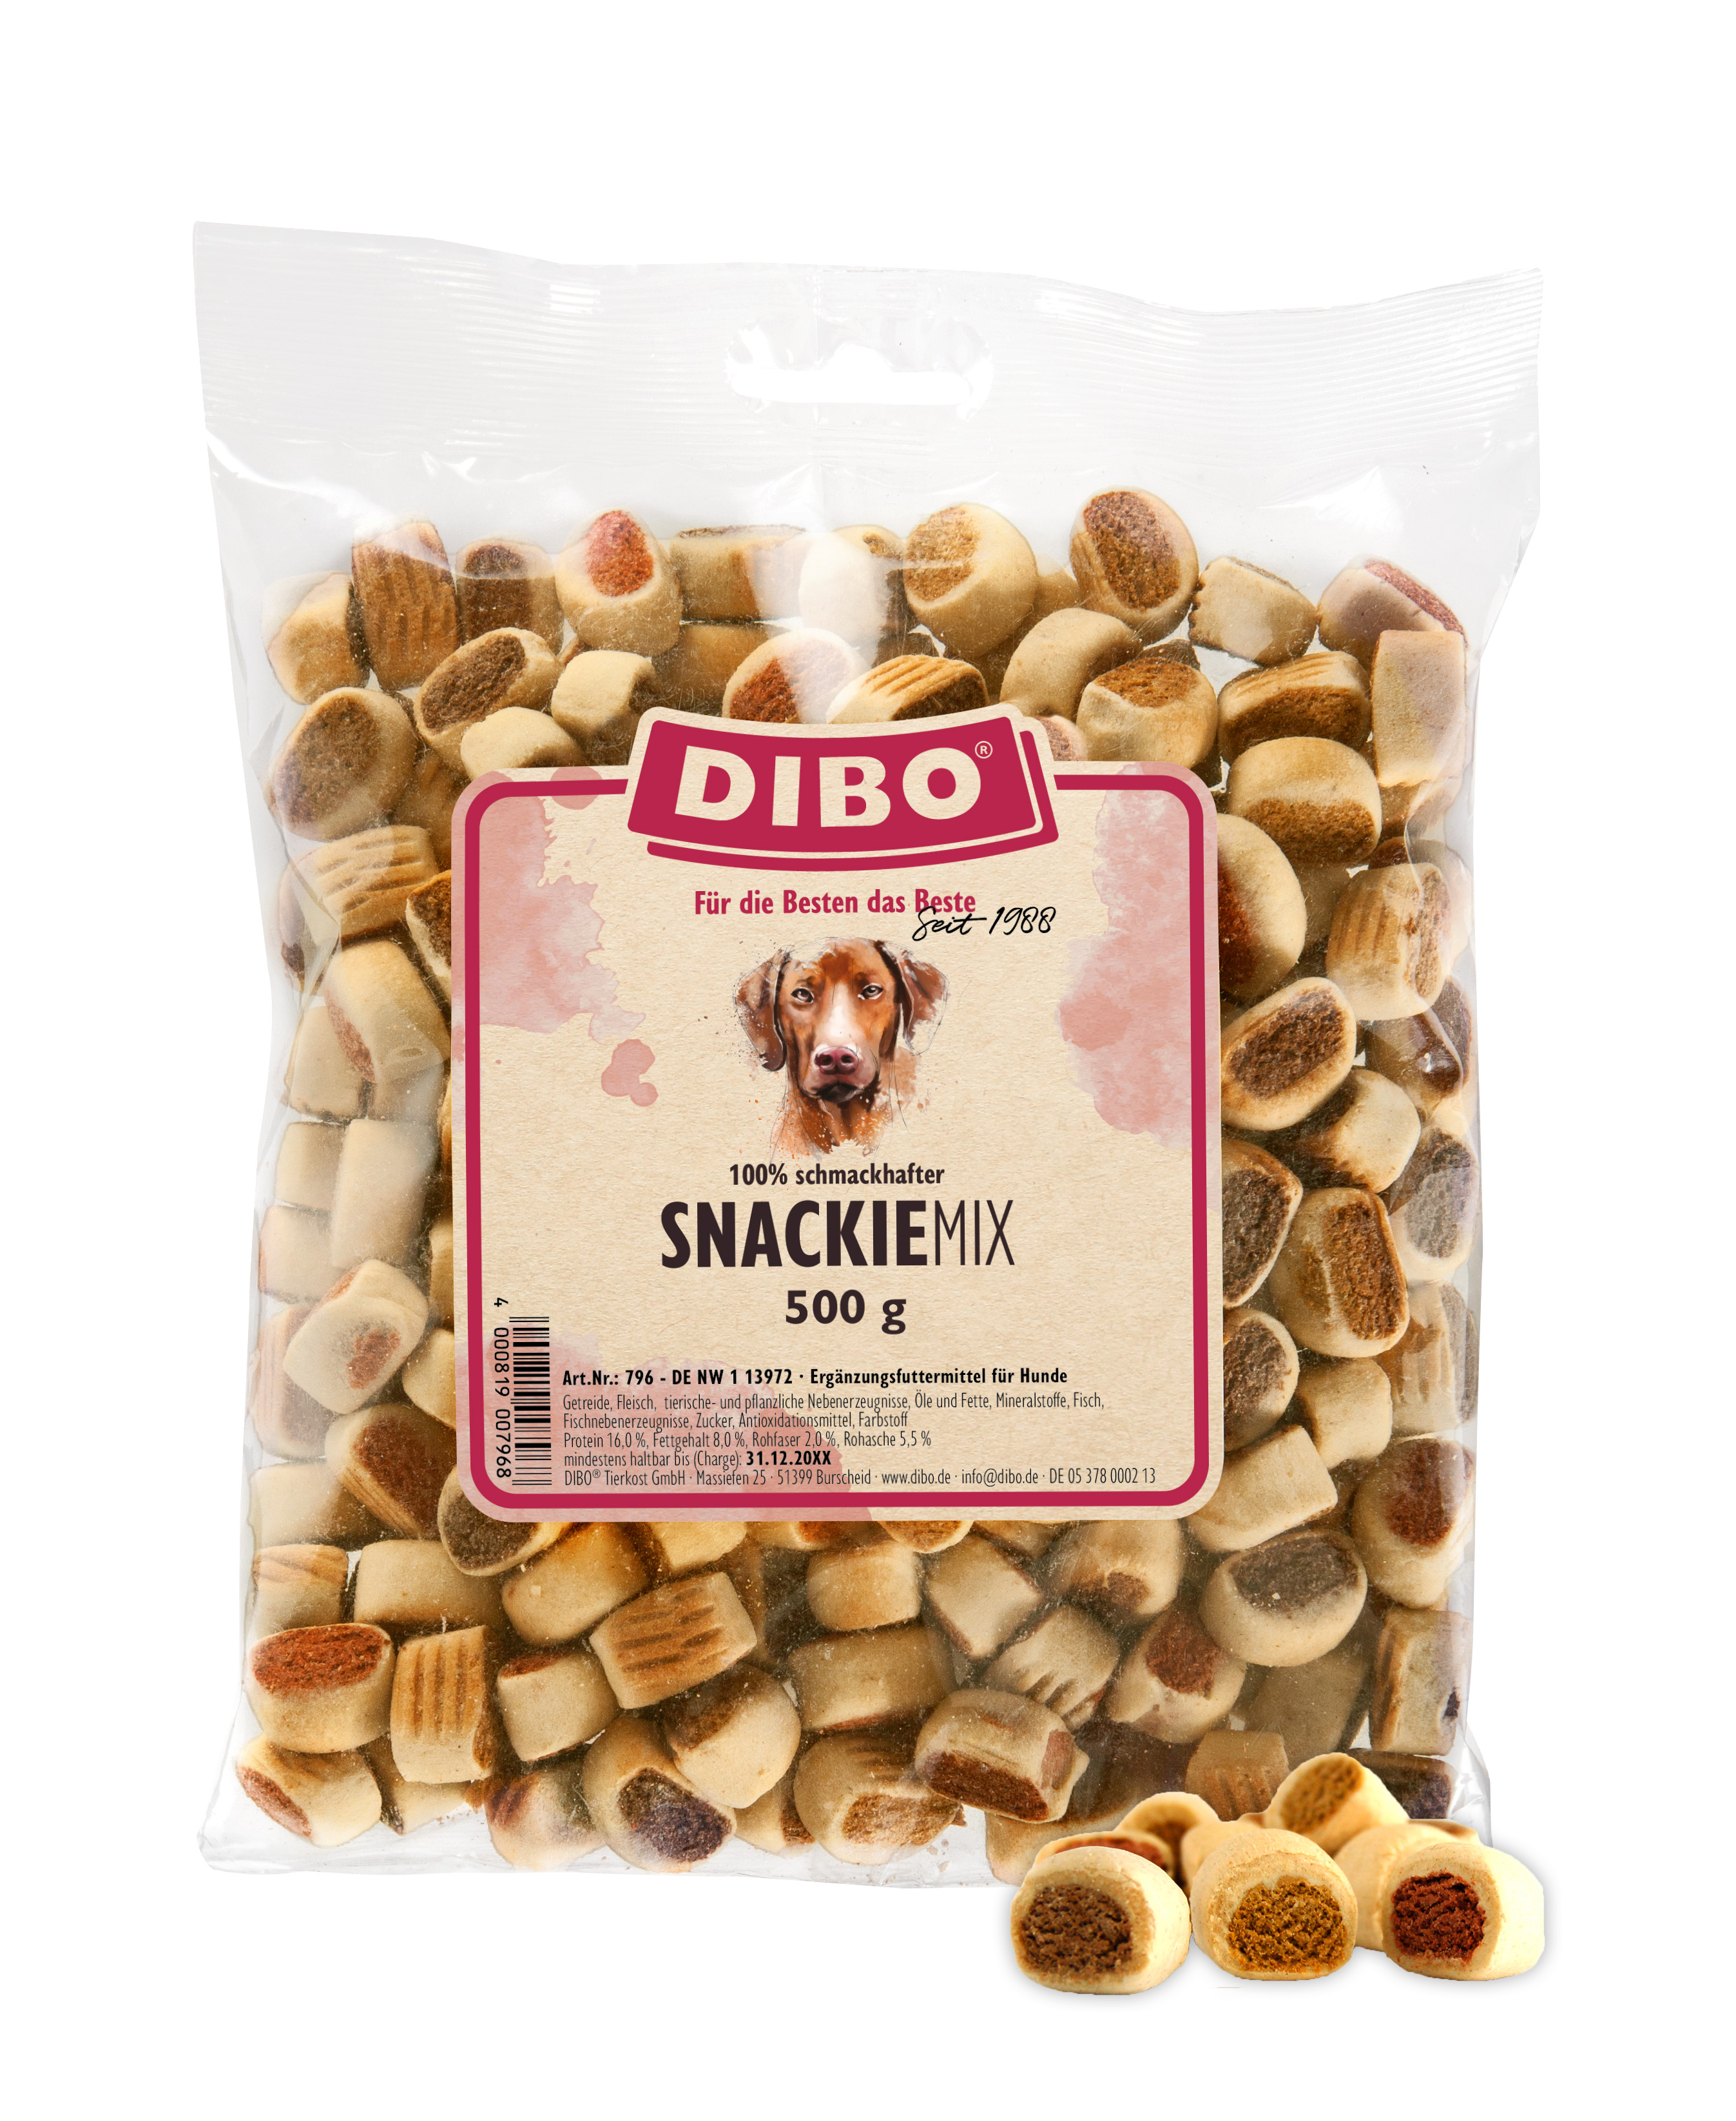 DIBO Snackie-Mix, 500g-Beutel